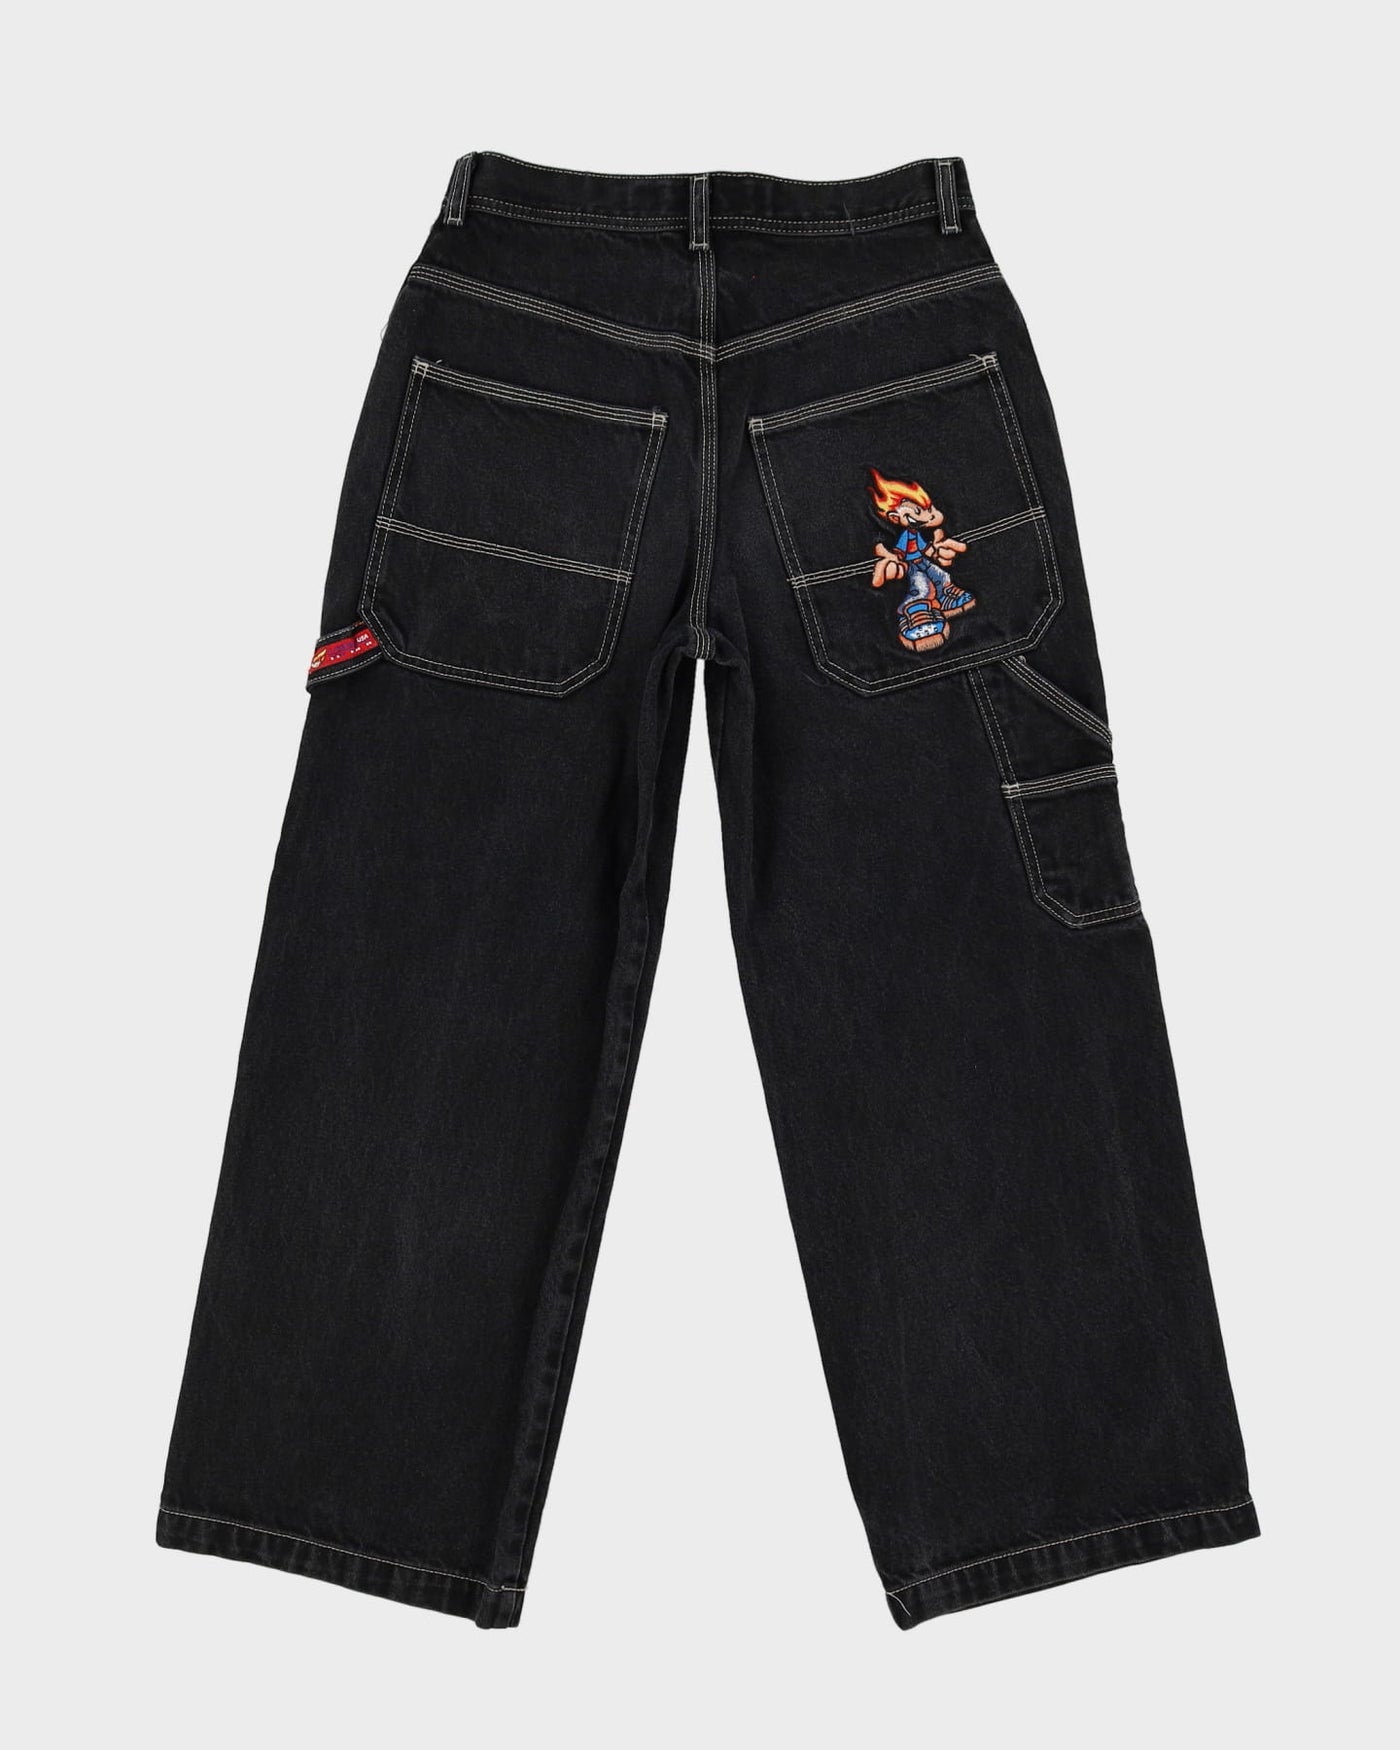 00s Y2K JNCO Flamehead USA Black Baggy Oversized Contrast Stitch Jeans - W30 L28